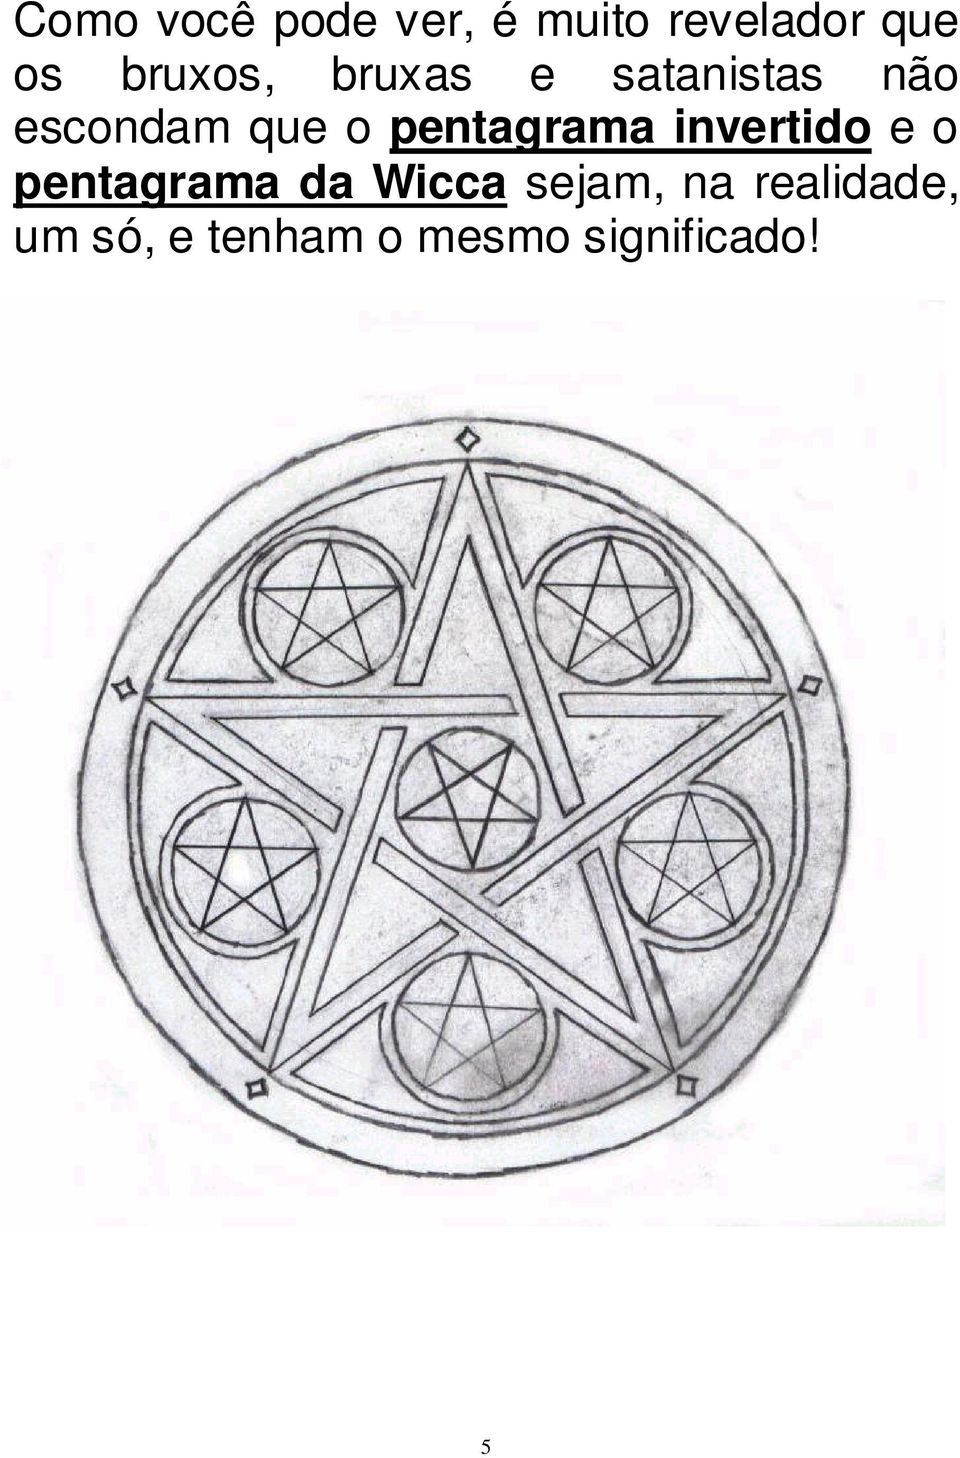 pentagrama invertido e o pentagrama da Wicca